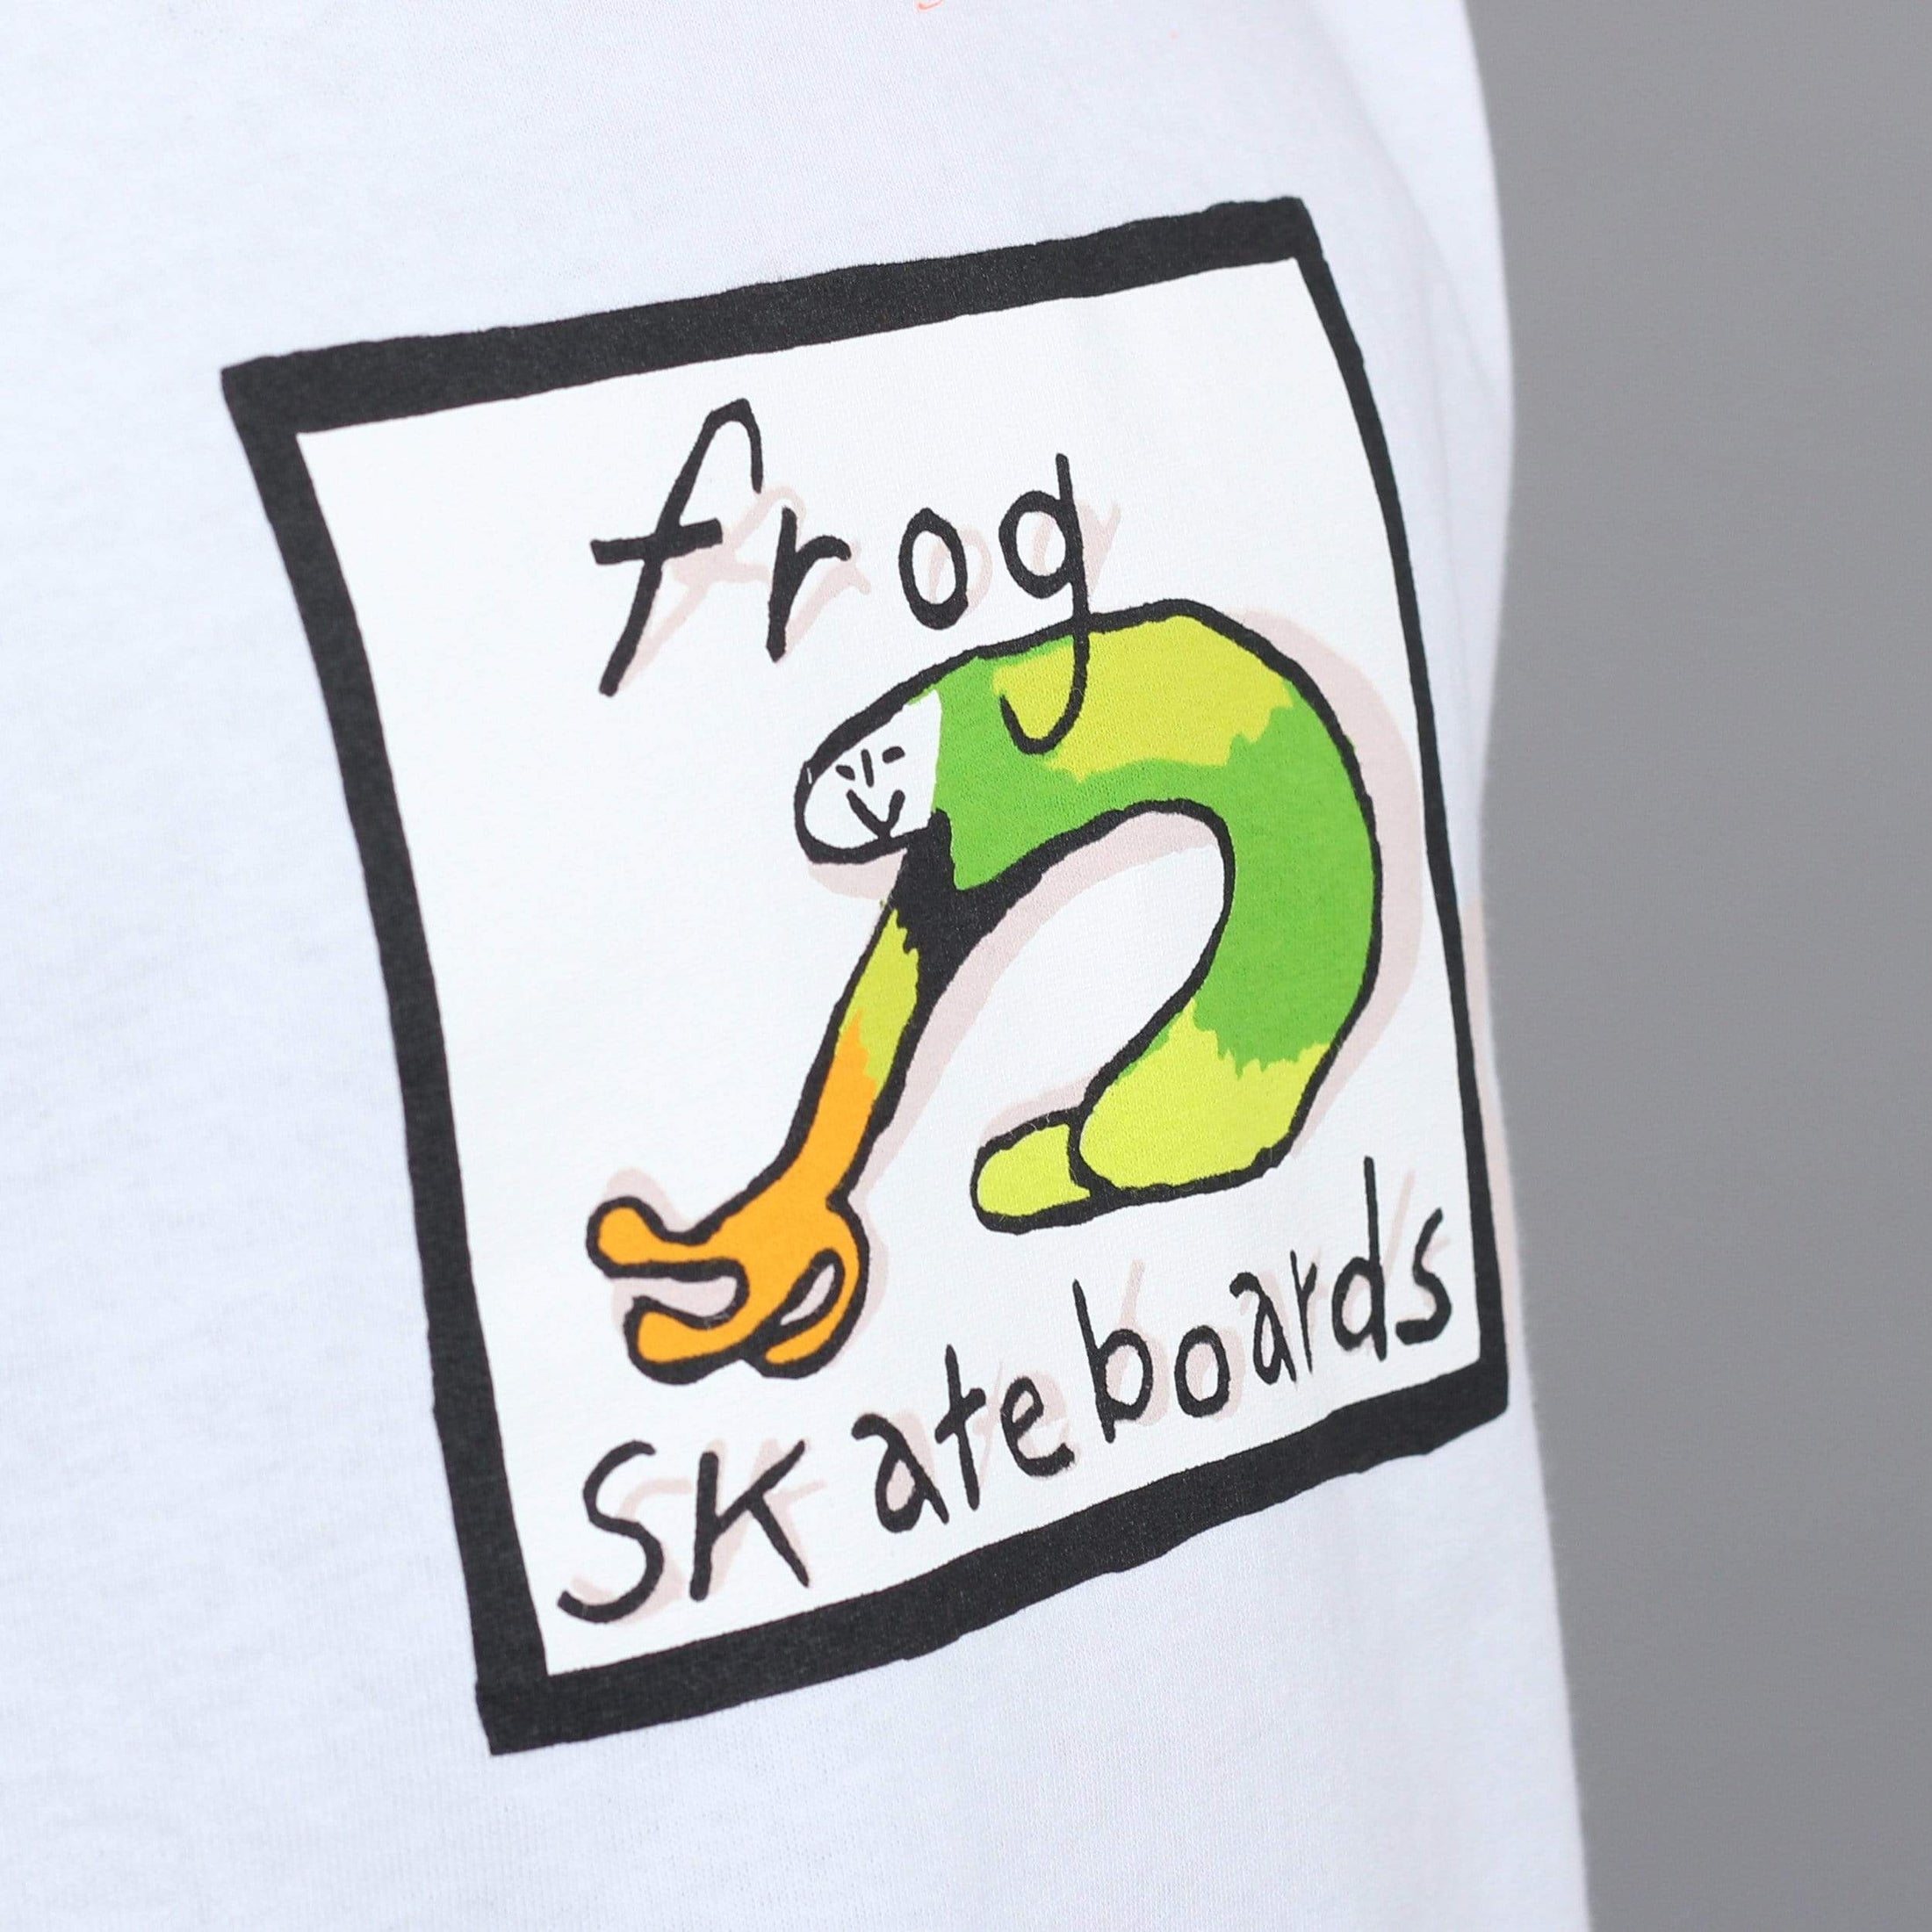 Frog Classic Logo T-Shirt White